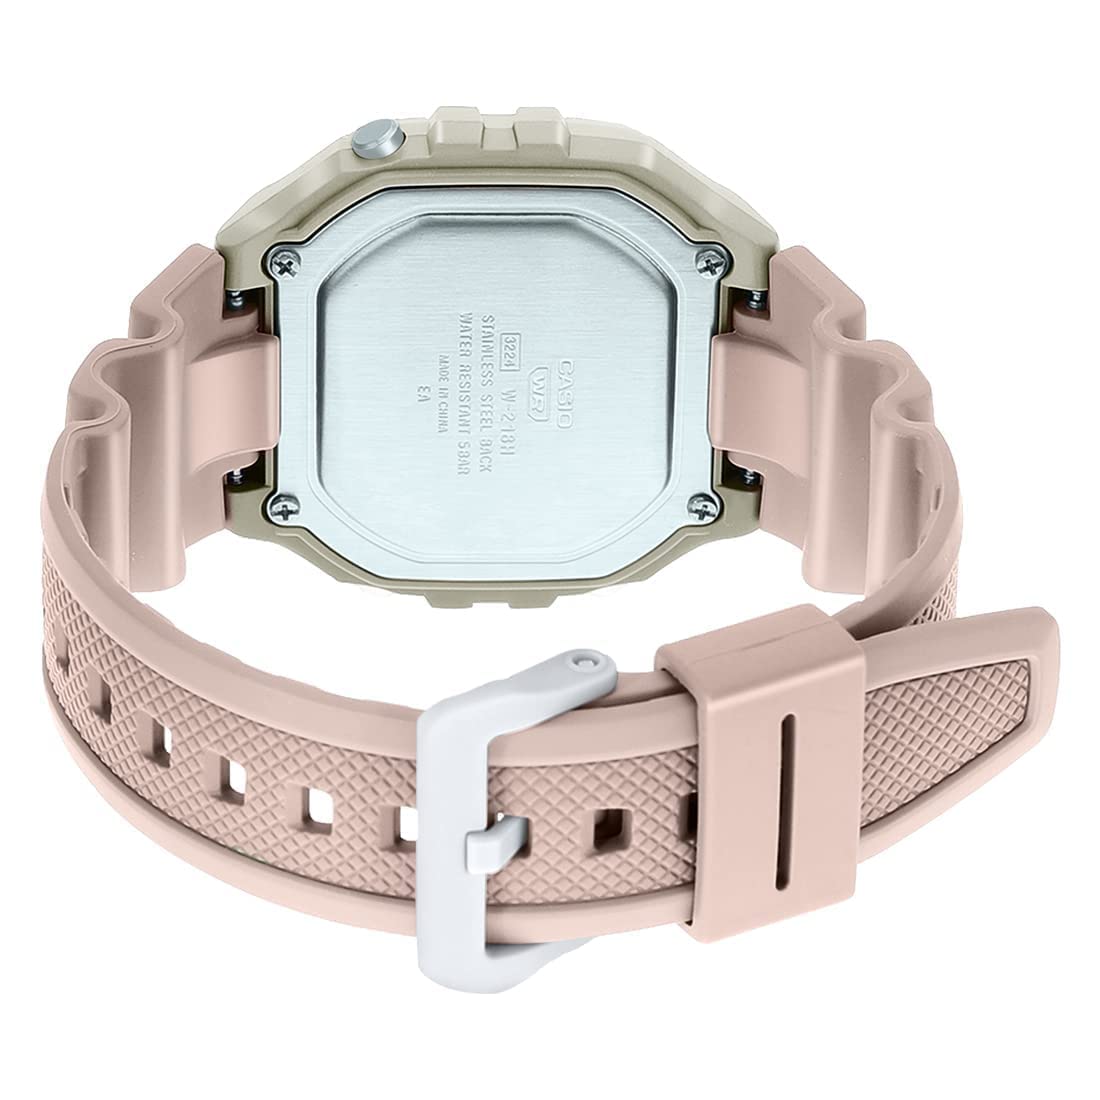 Casio Watch Chronograph Digital White Pink W-218HC-4A2VDF